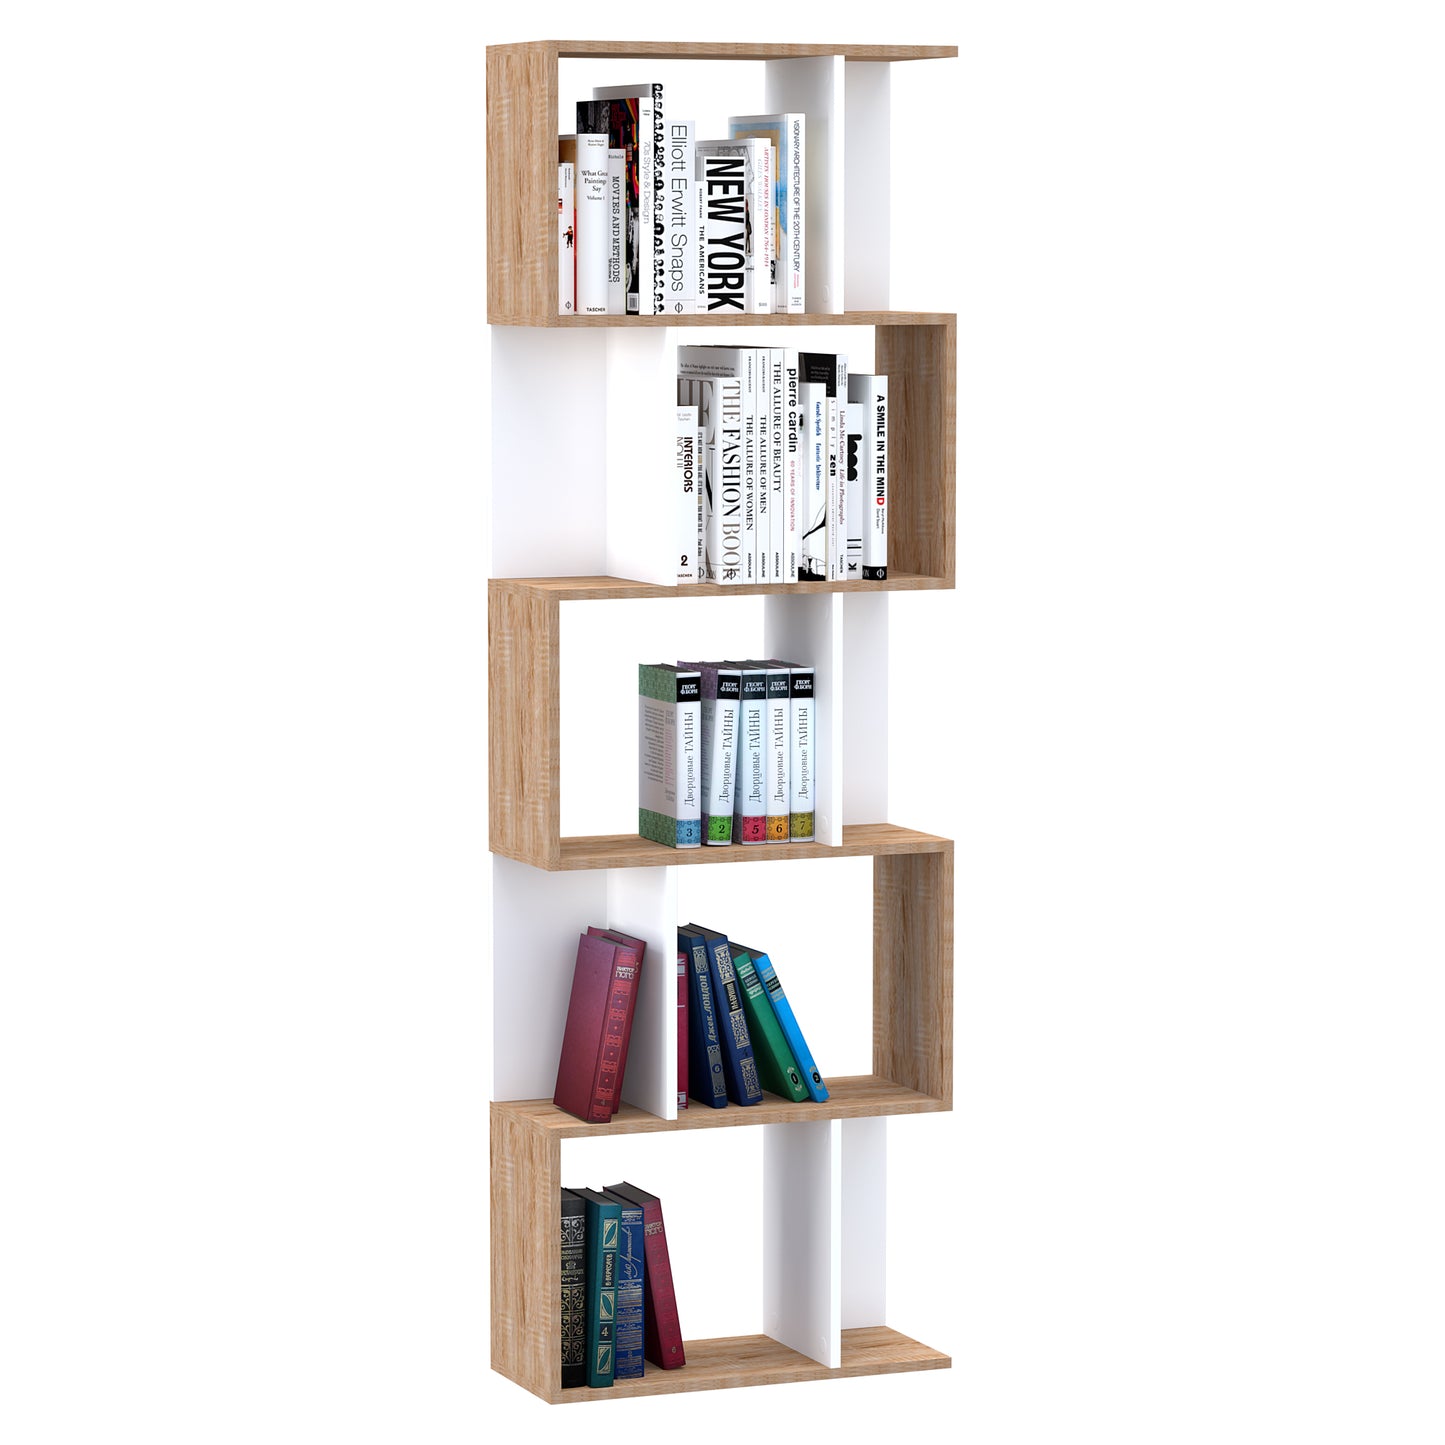 5-tier Bookcase, Storage Display Shelving, S Shape design Unit Divider, White, Wood Effect, HOMCOM, 1